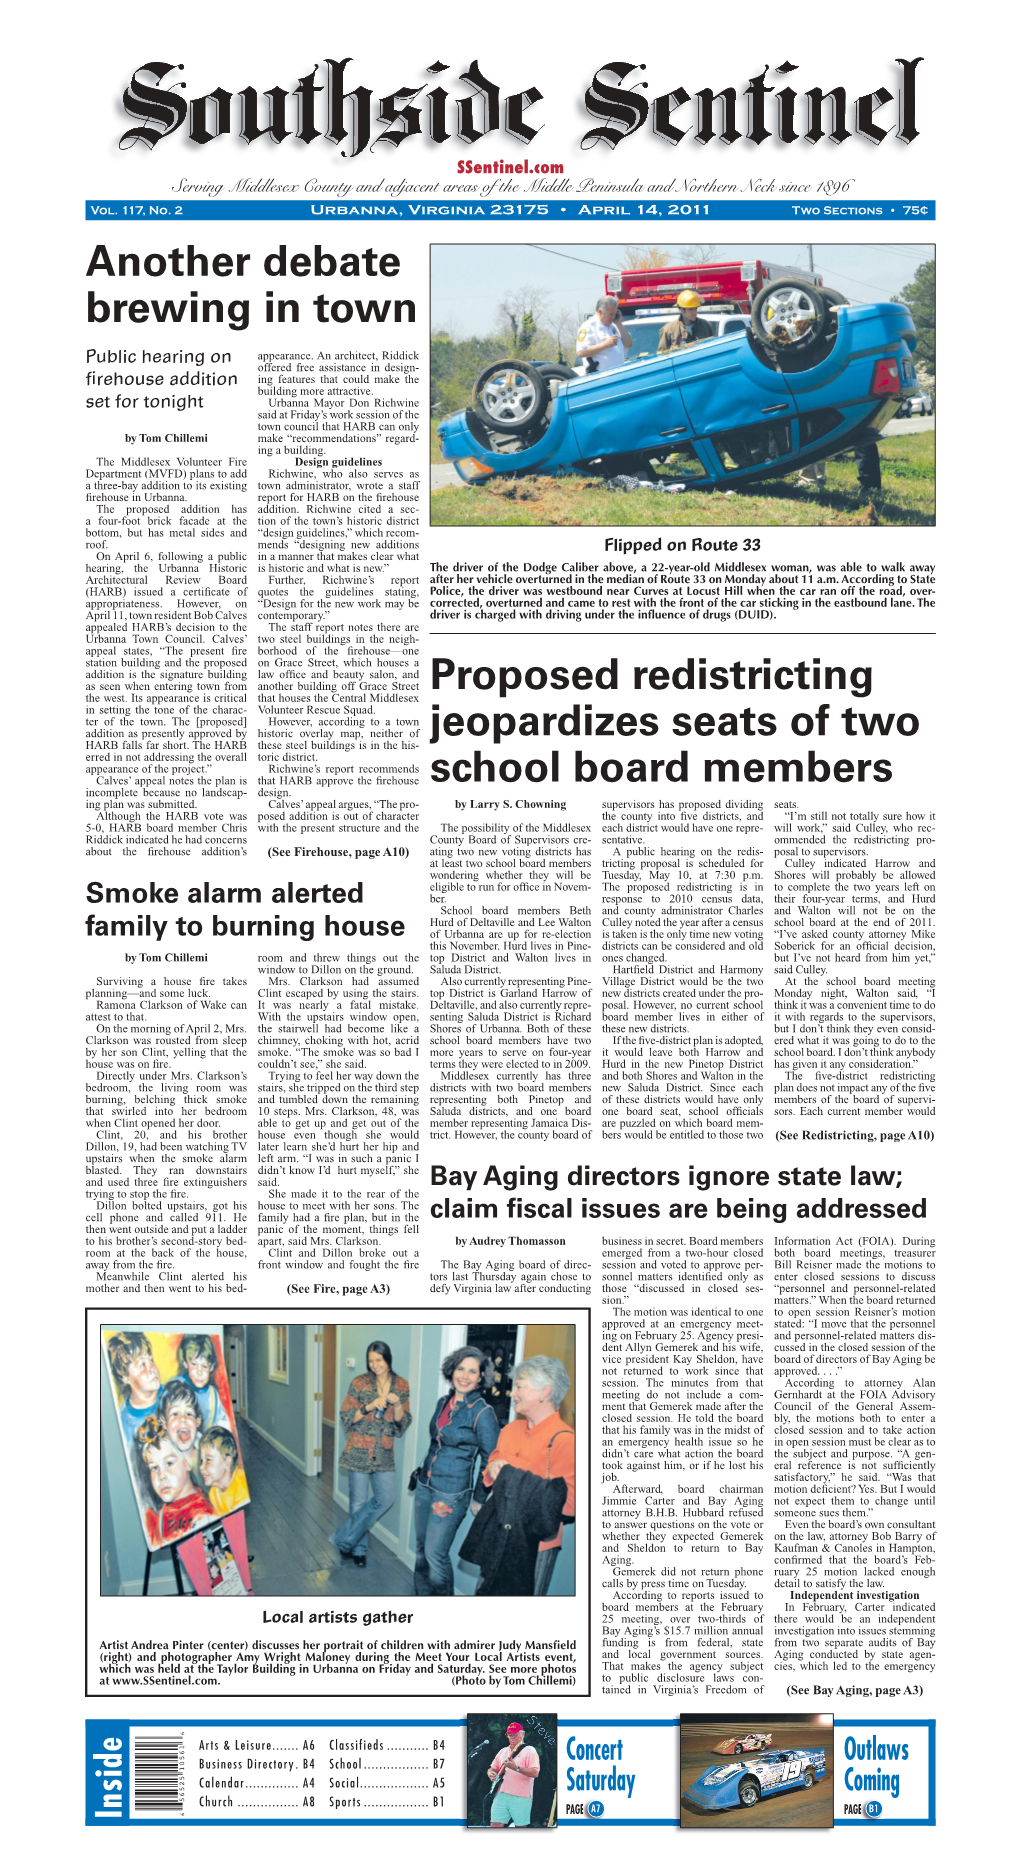 Proposed Redistricting Jeopardizes Seats of Two School Board Members